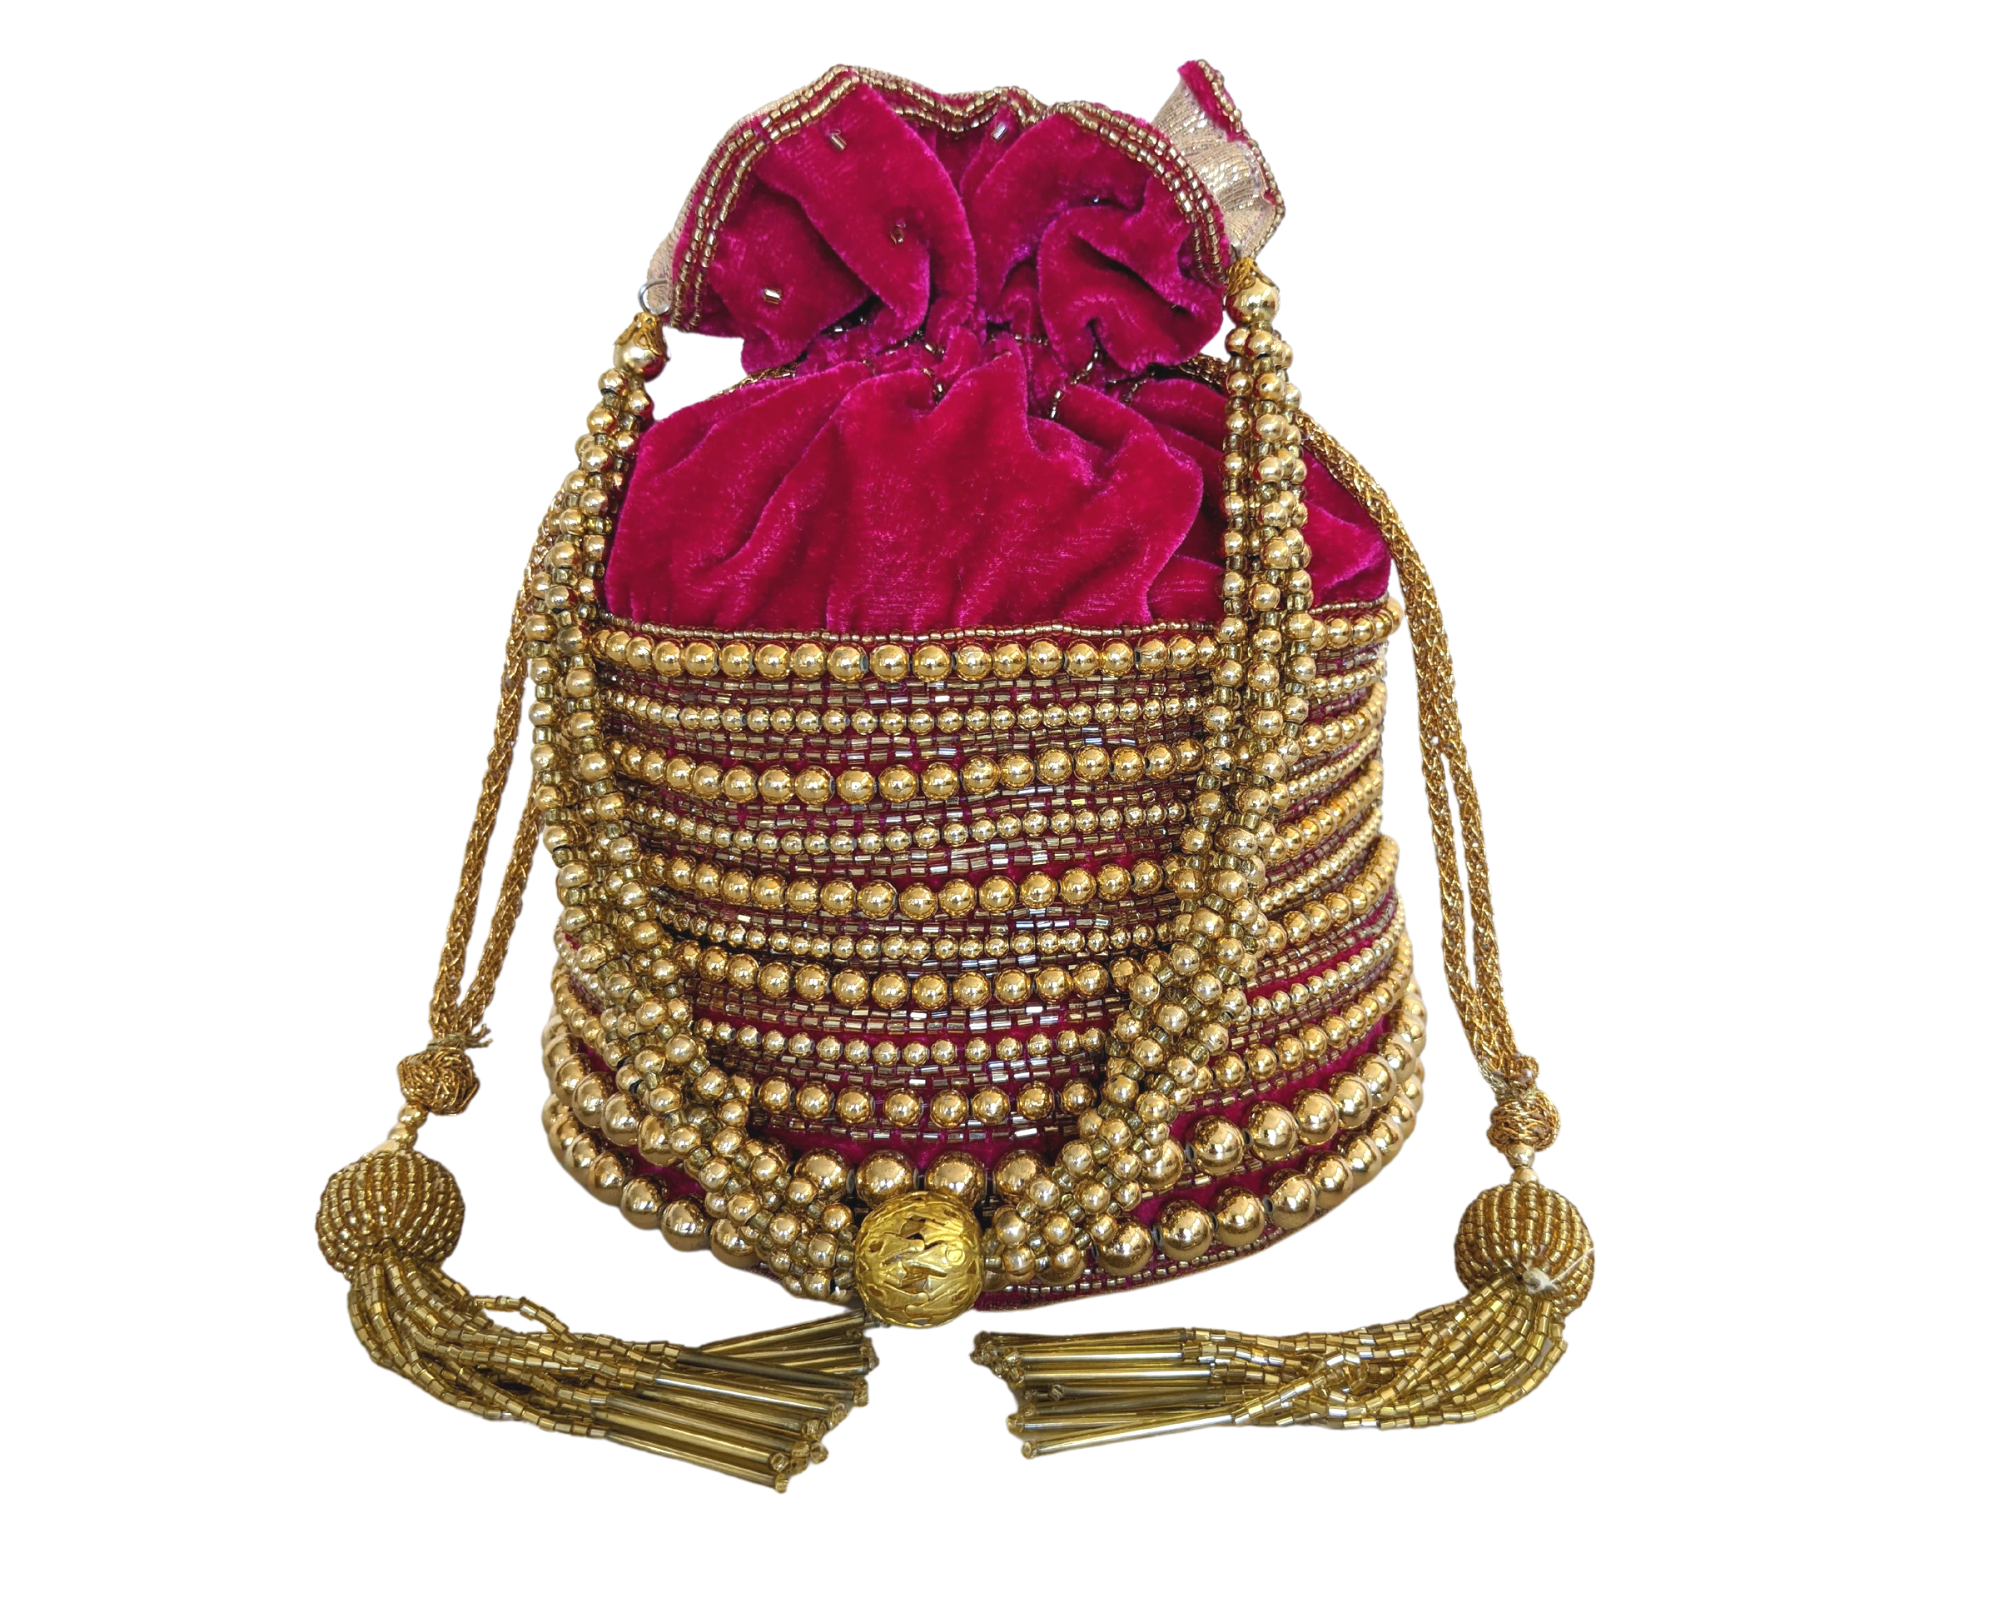 Indian Ladies Evening Bags | Indian Bag Women Diamond | Wedding Bag Indian  Woman - New - Aliexpress